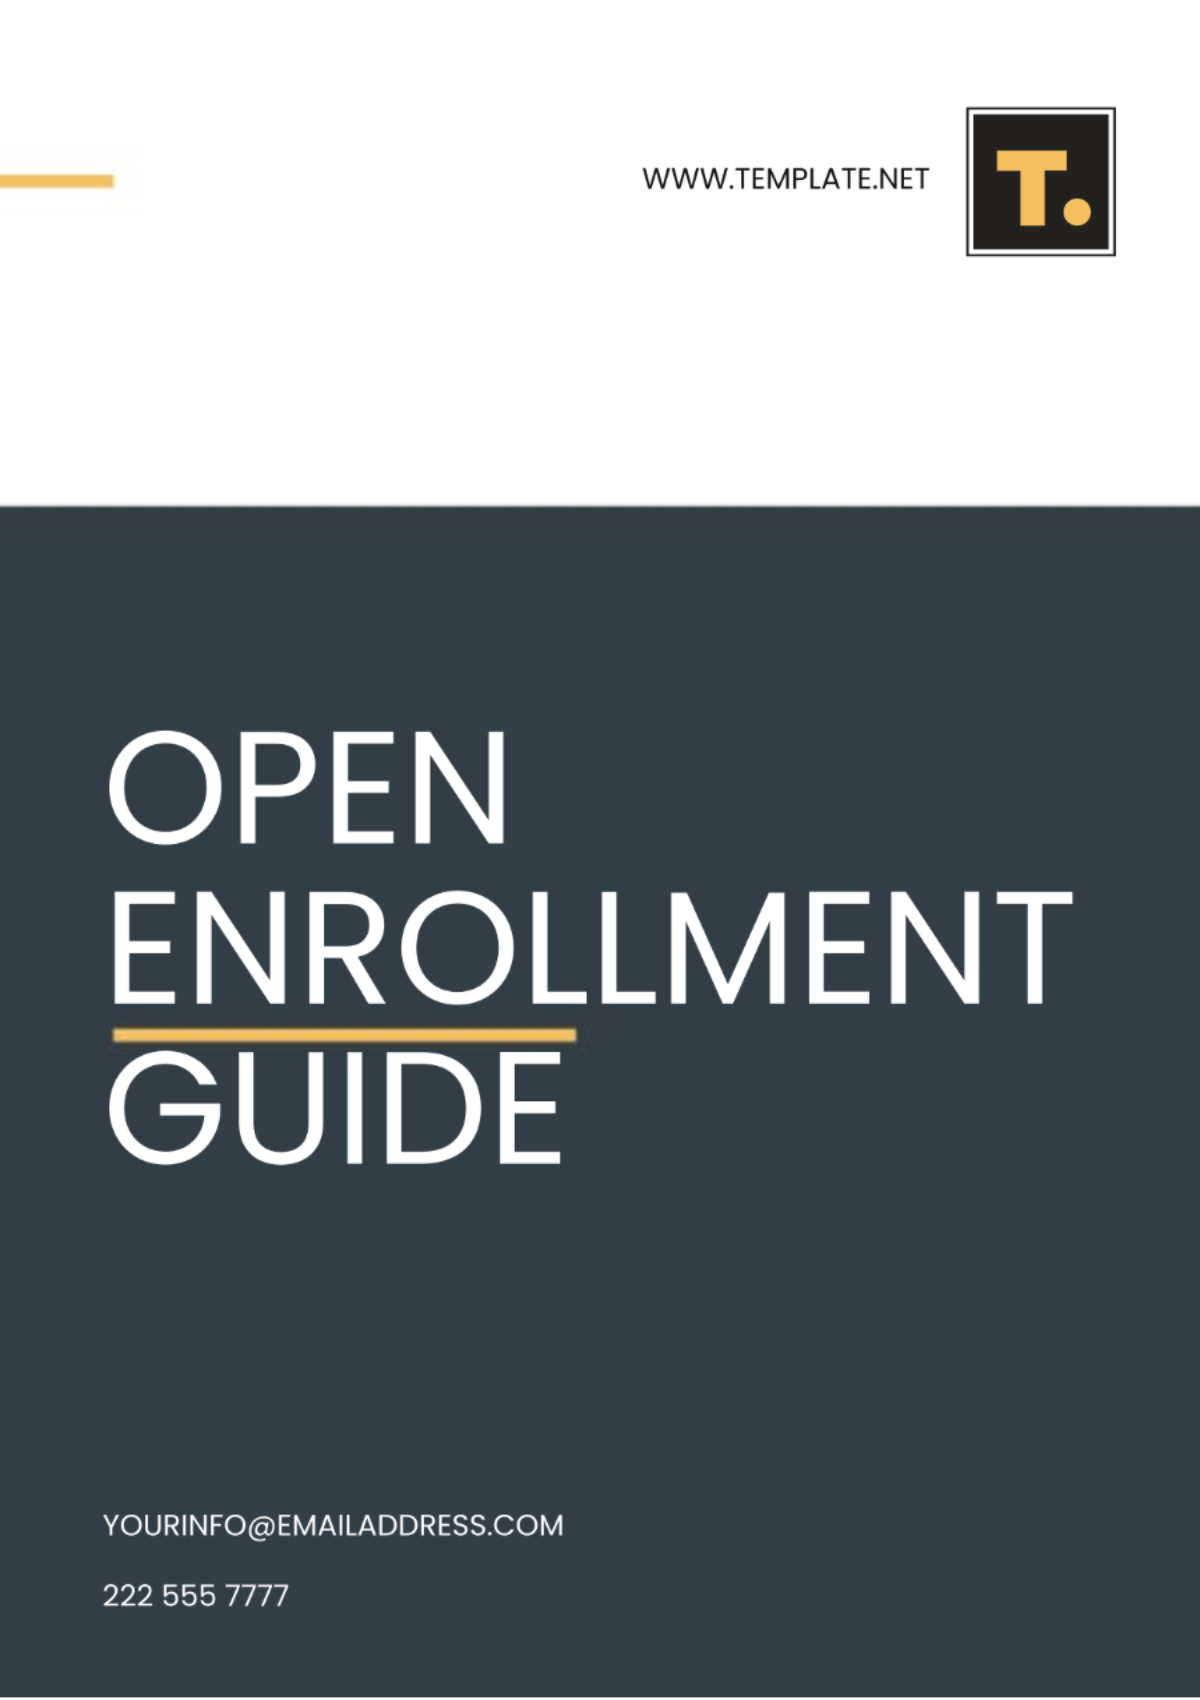 Free Open Enrollment Guide Template